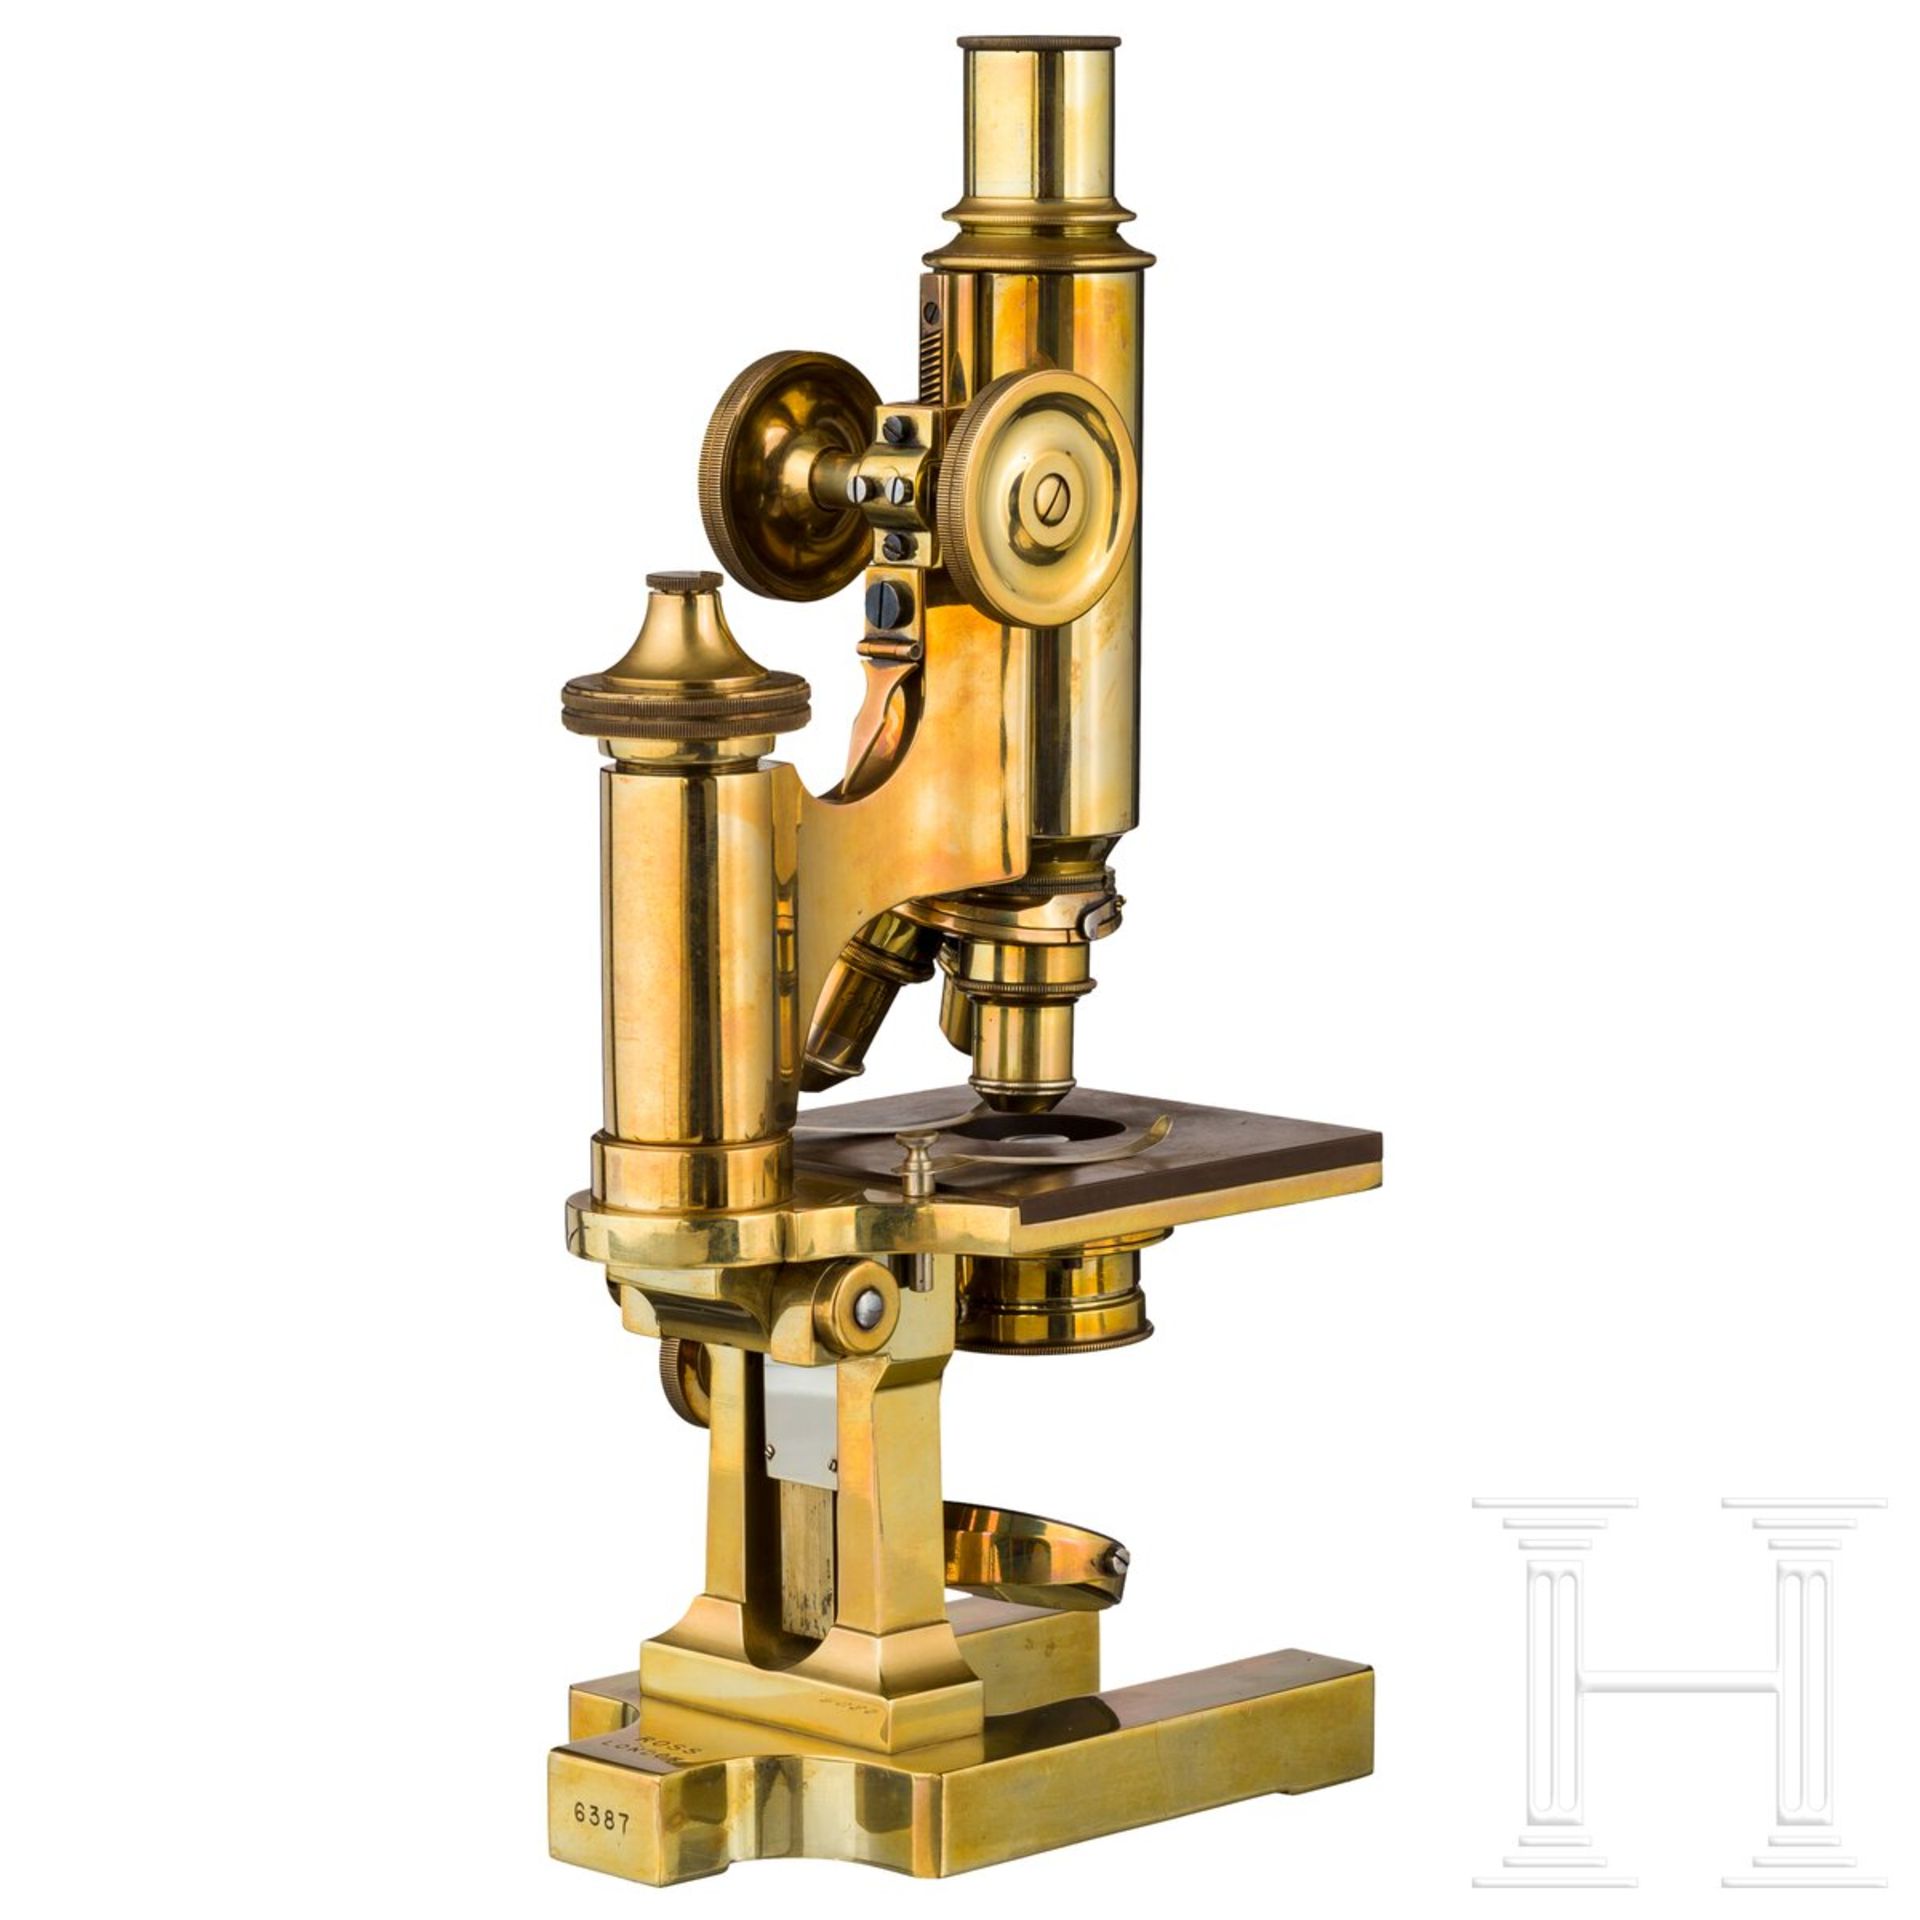 Mikroskop, Ross, London, um 1900 - Image 2 of 3